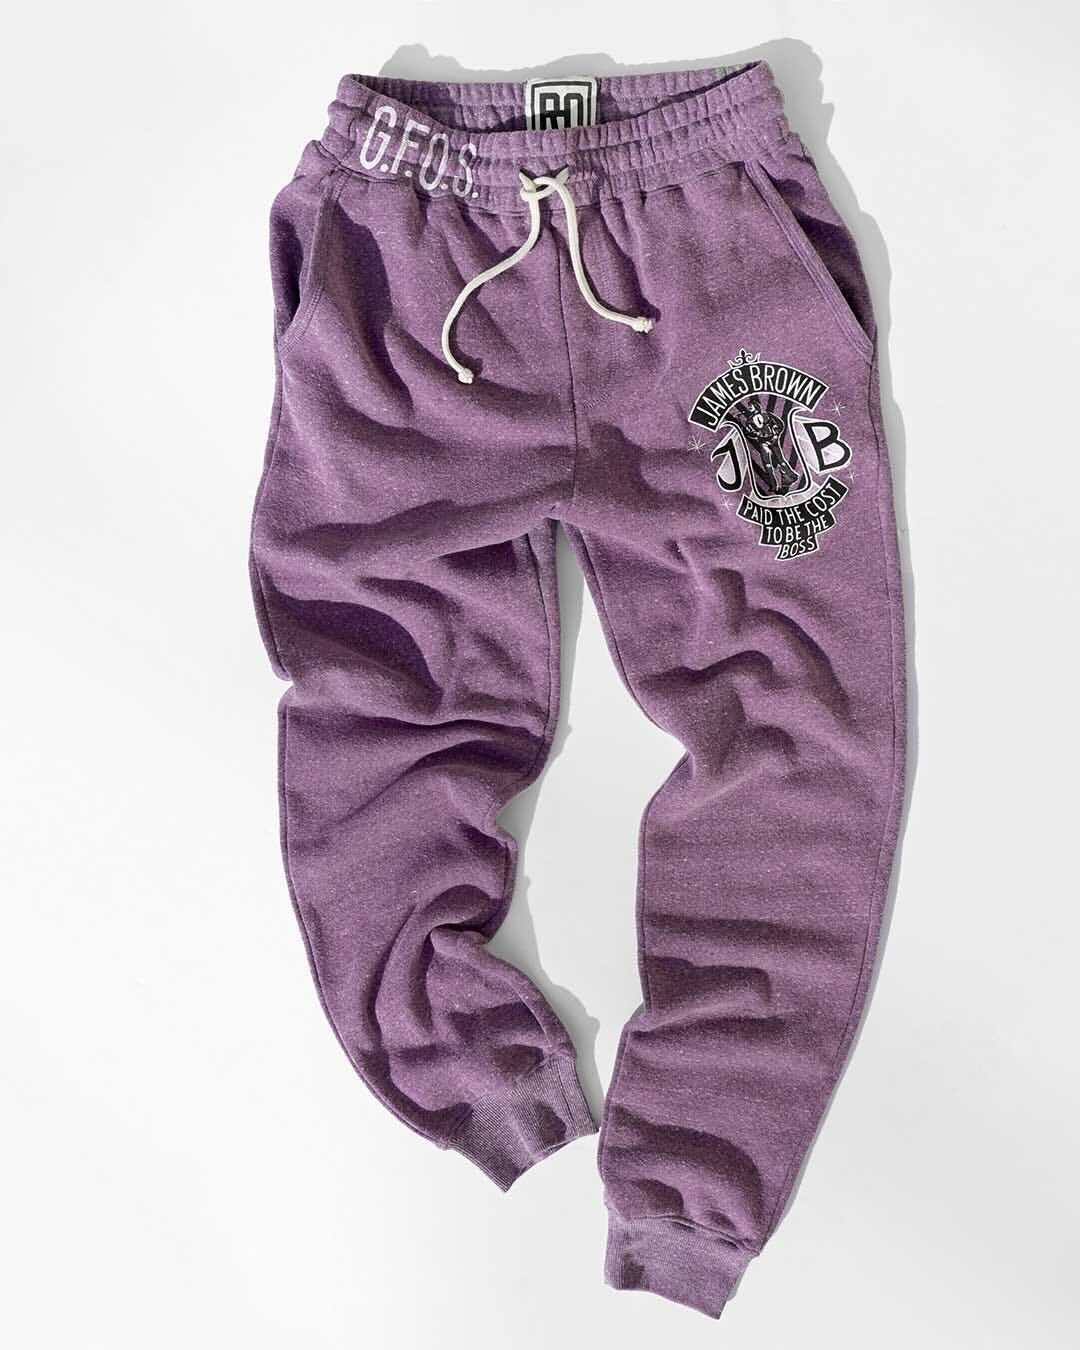 Women's Hollister Sweatpants, size 34 (Pink)